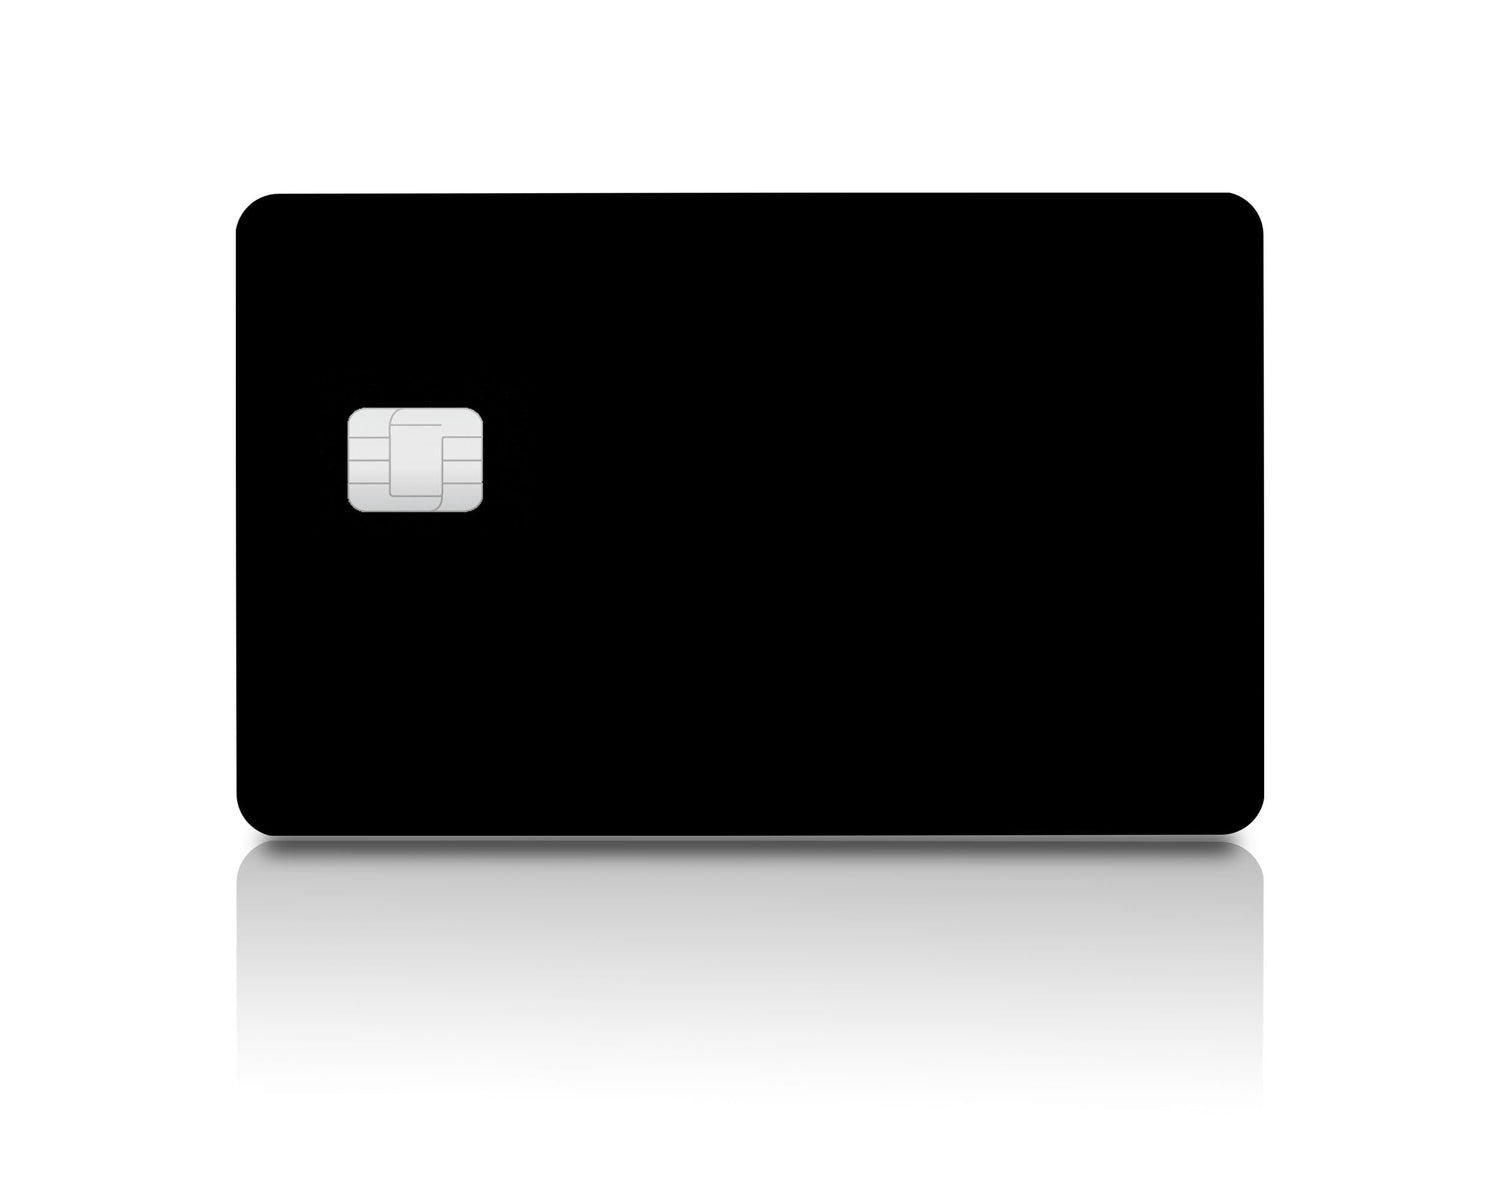 Flex Designs Credit Card Matte Black Full Skins - Pattern  & Debit Card Skin